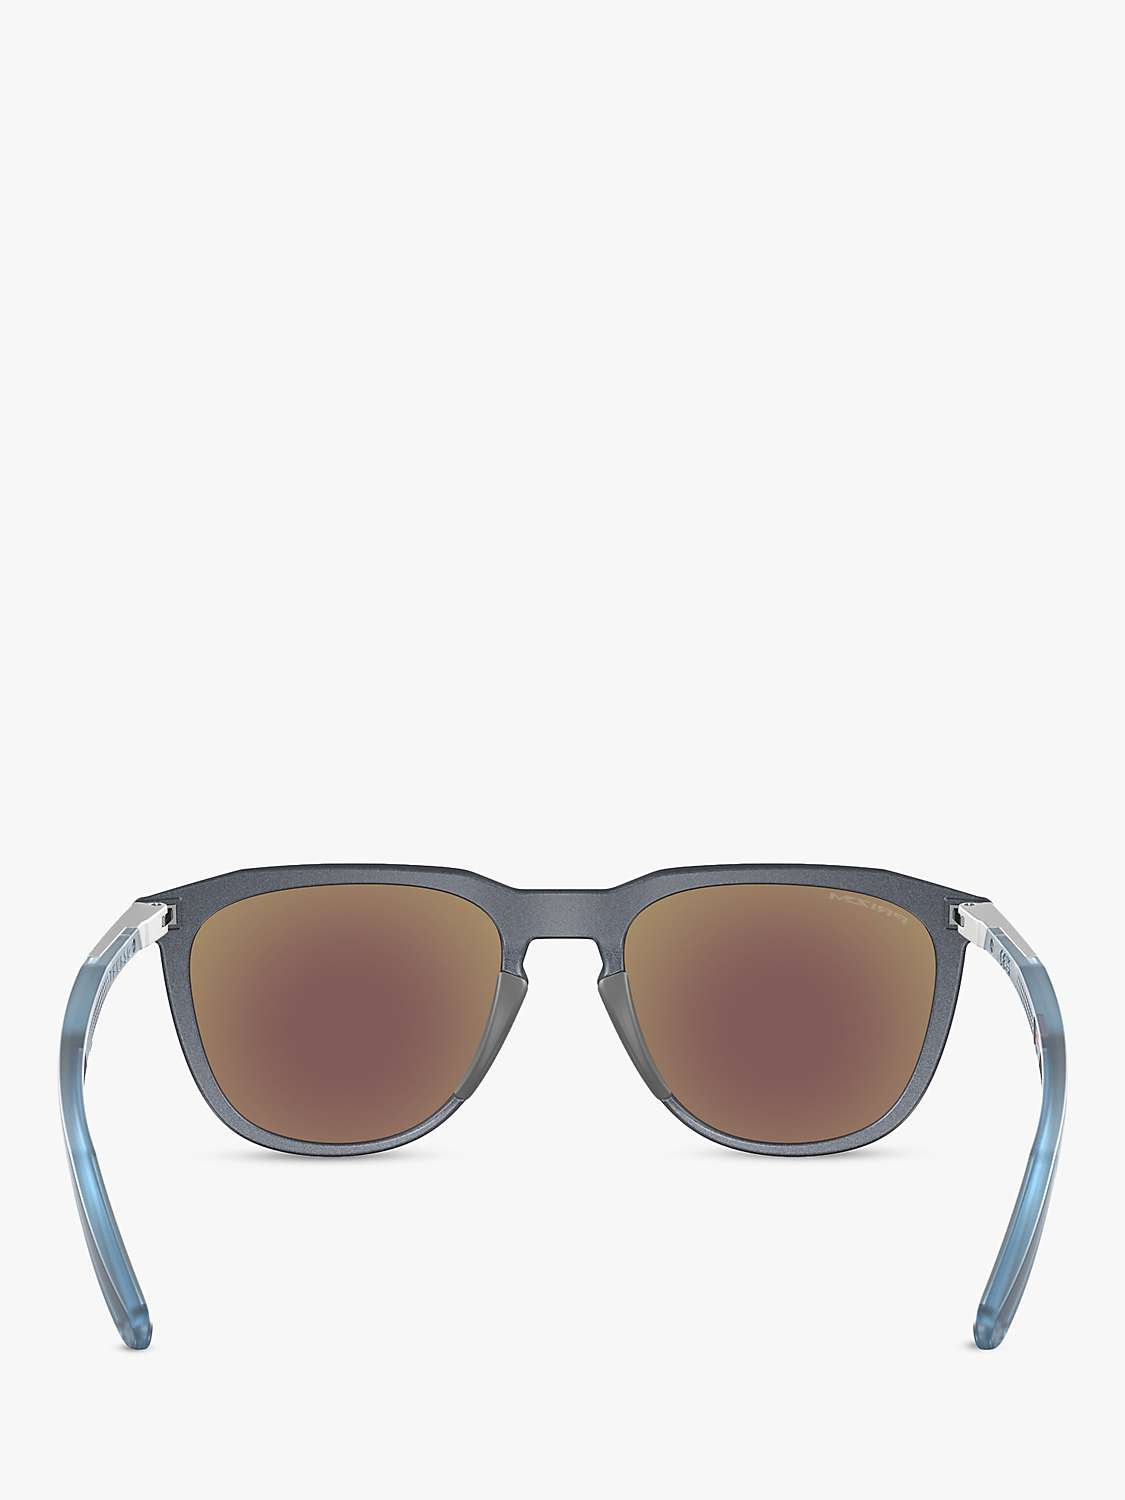 Buy Oakley OO9286 Men's Thurso Sunglasses, Blue Steel Online at johnlewis.com